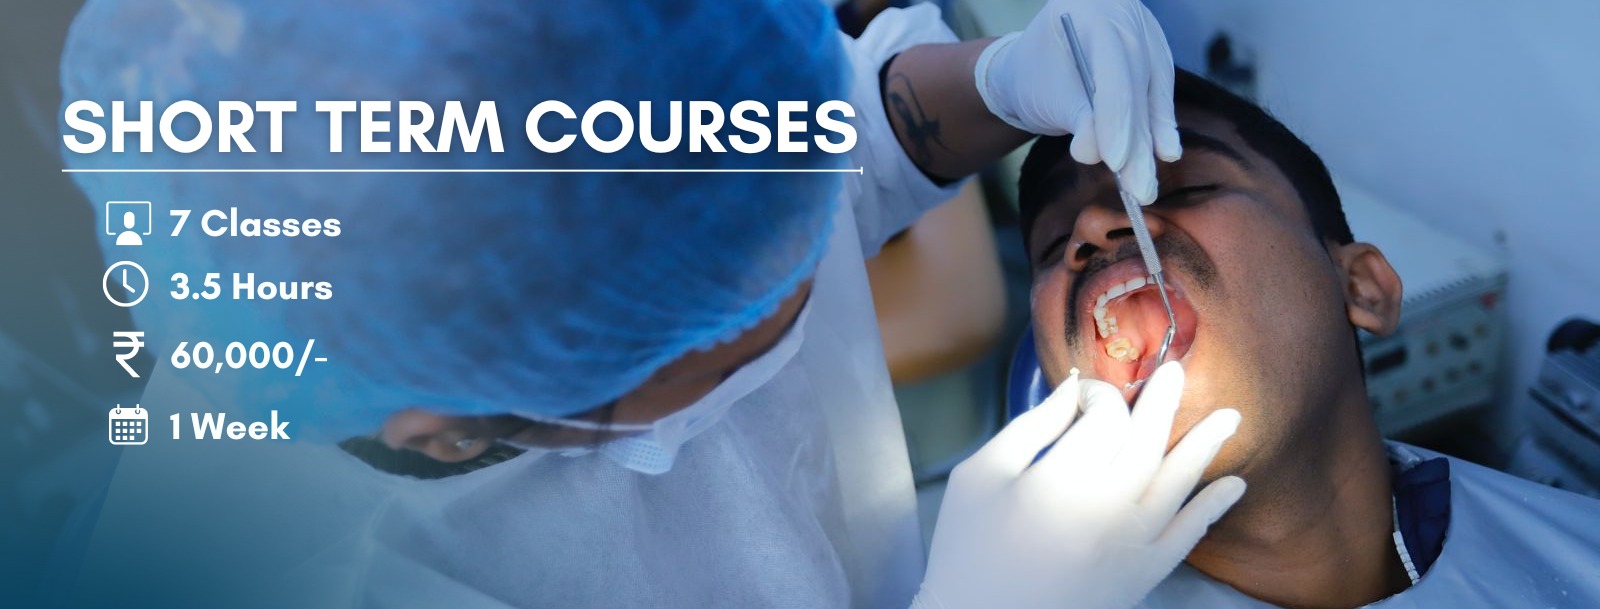 short term dental courses in delhi